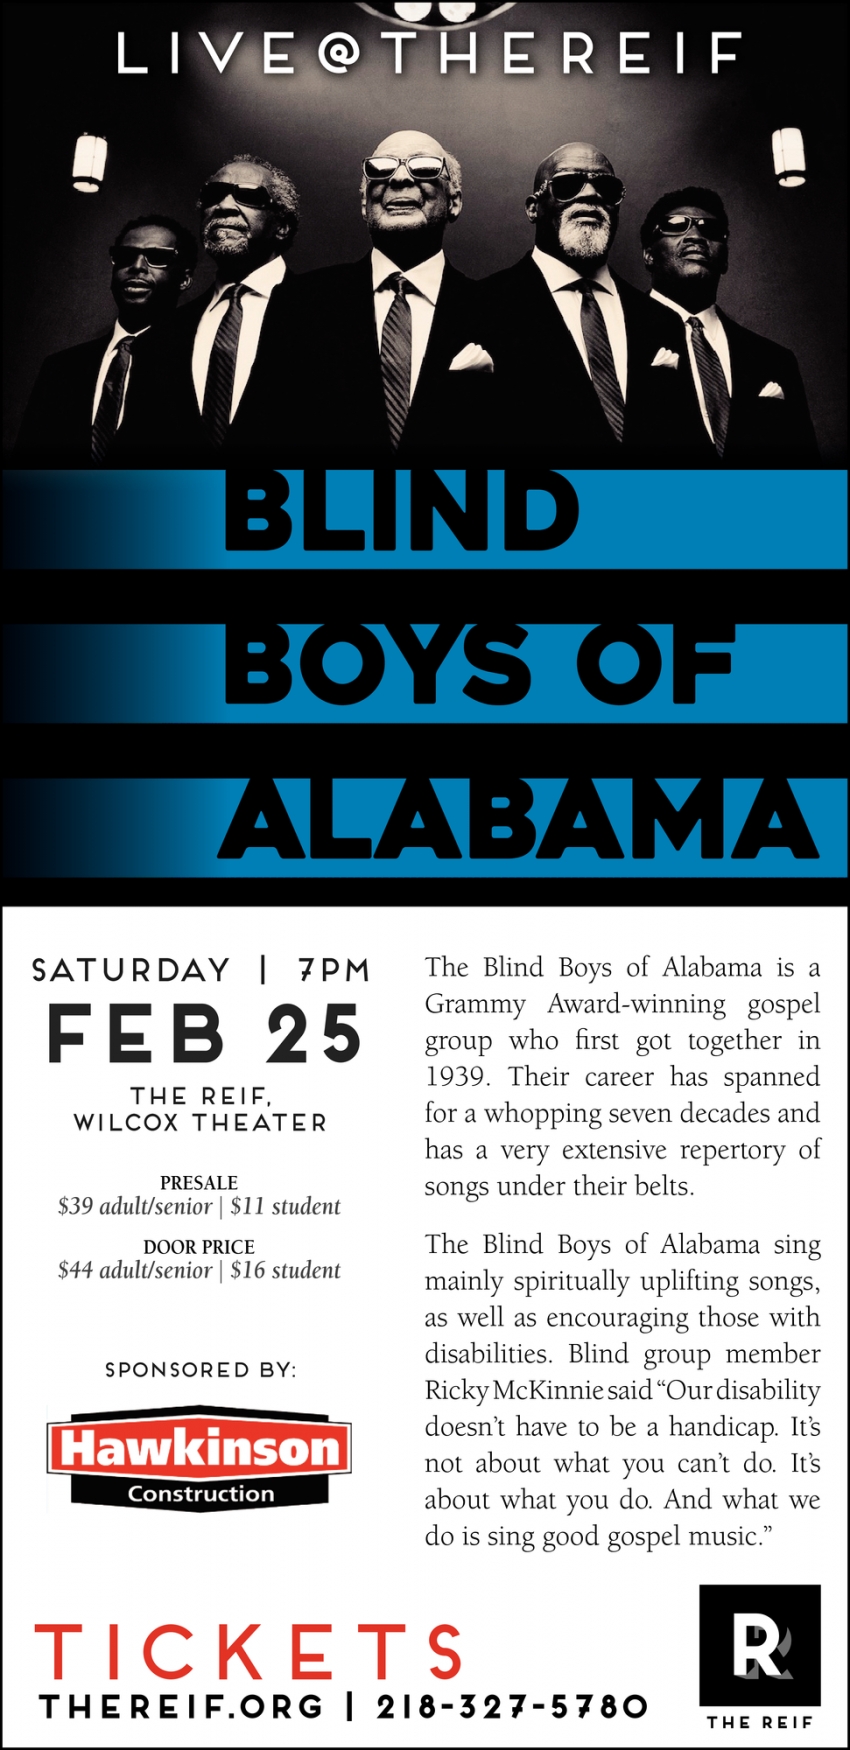 Blind Boys Of Alabama